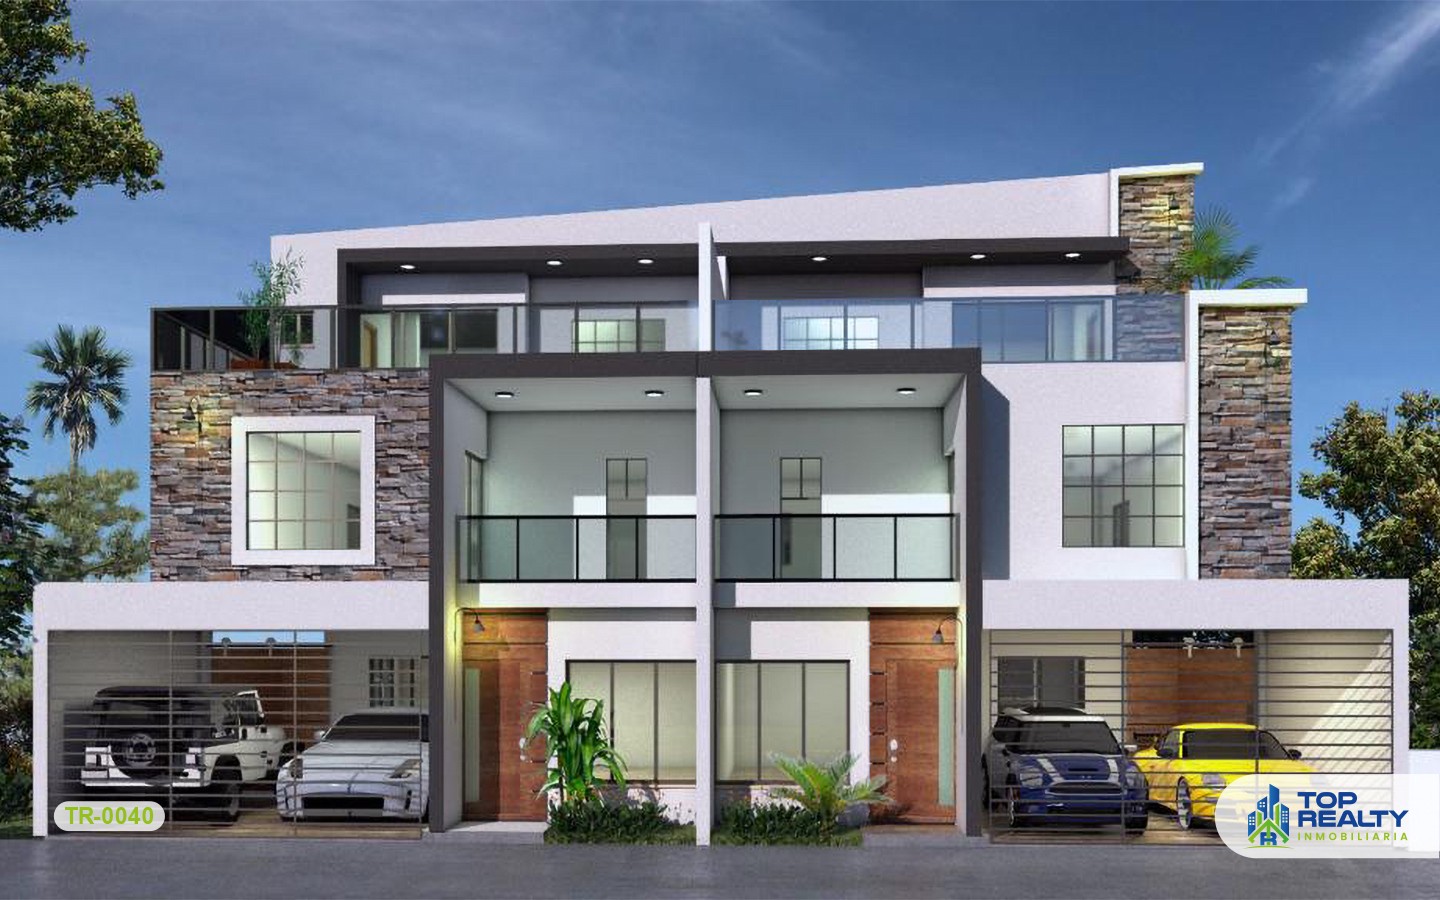 apartamentos - TR-0040: ¡Proyecto único! Casas en tres niveles con distribución excelente. 0